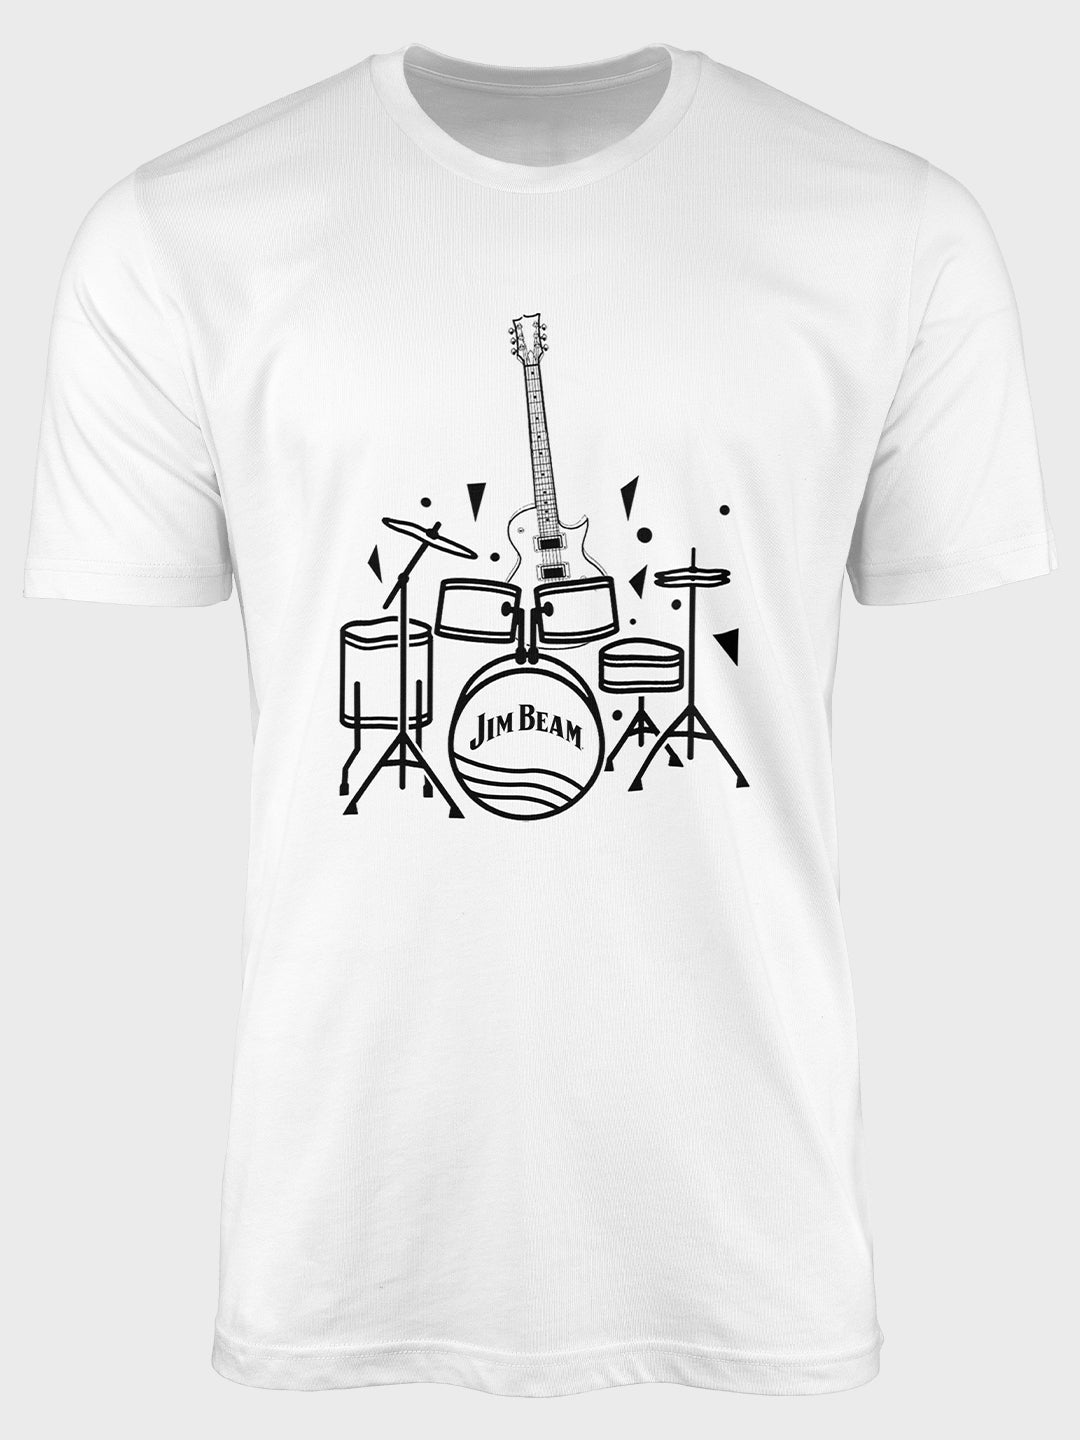 Band Inside out retro t-shirt, brand new white shirt TE2018